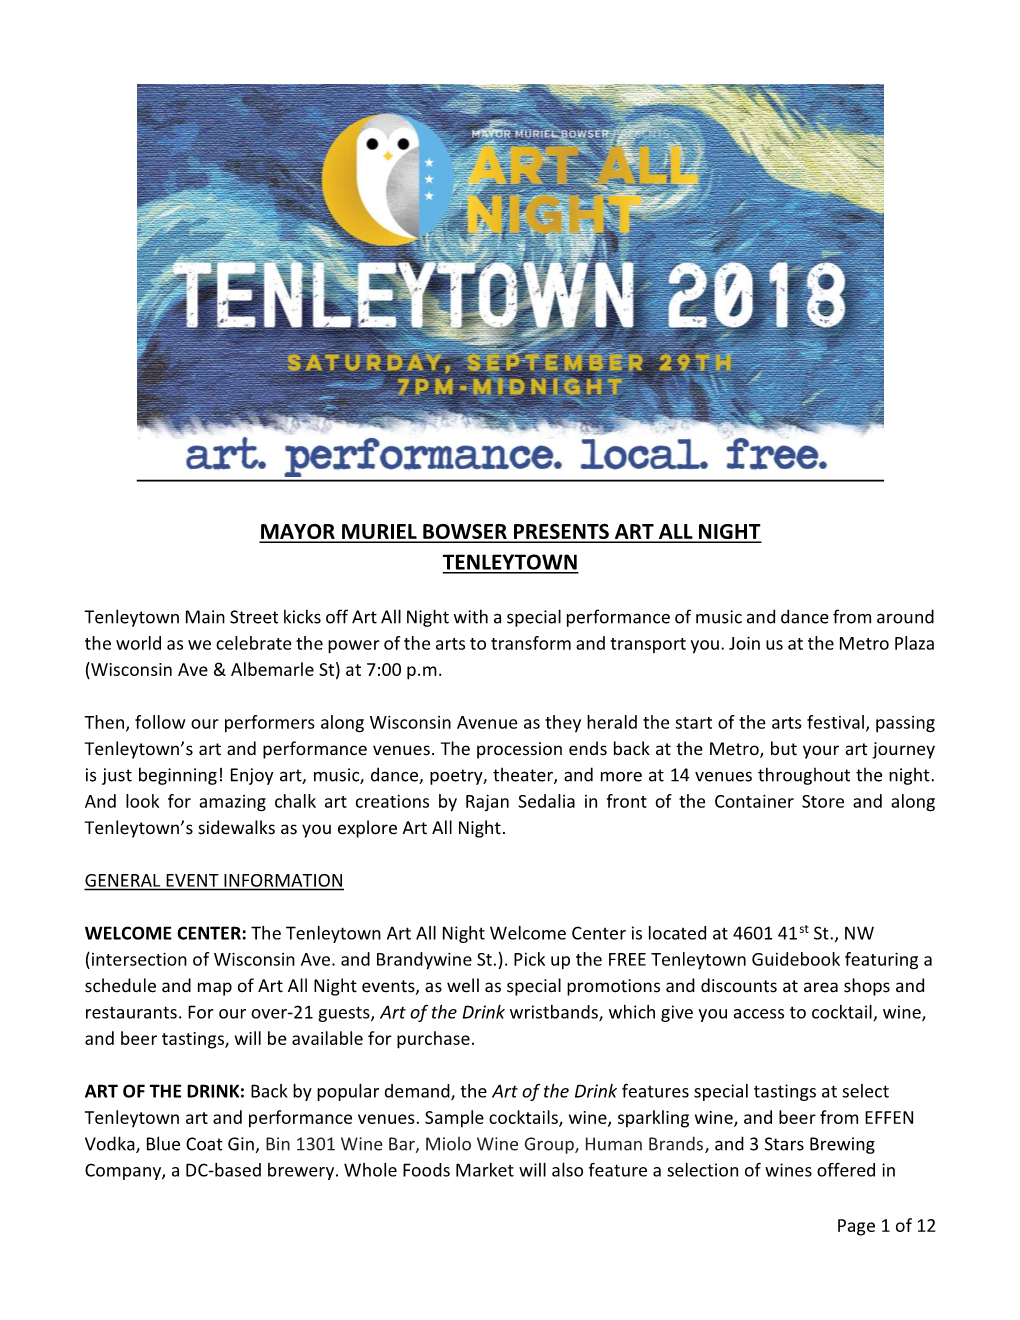 Mayor Muriel Bowser Presents Art All Night Tenleytown